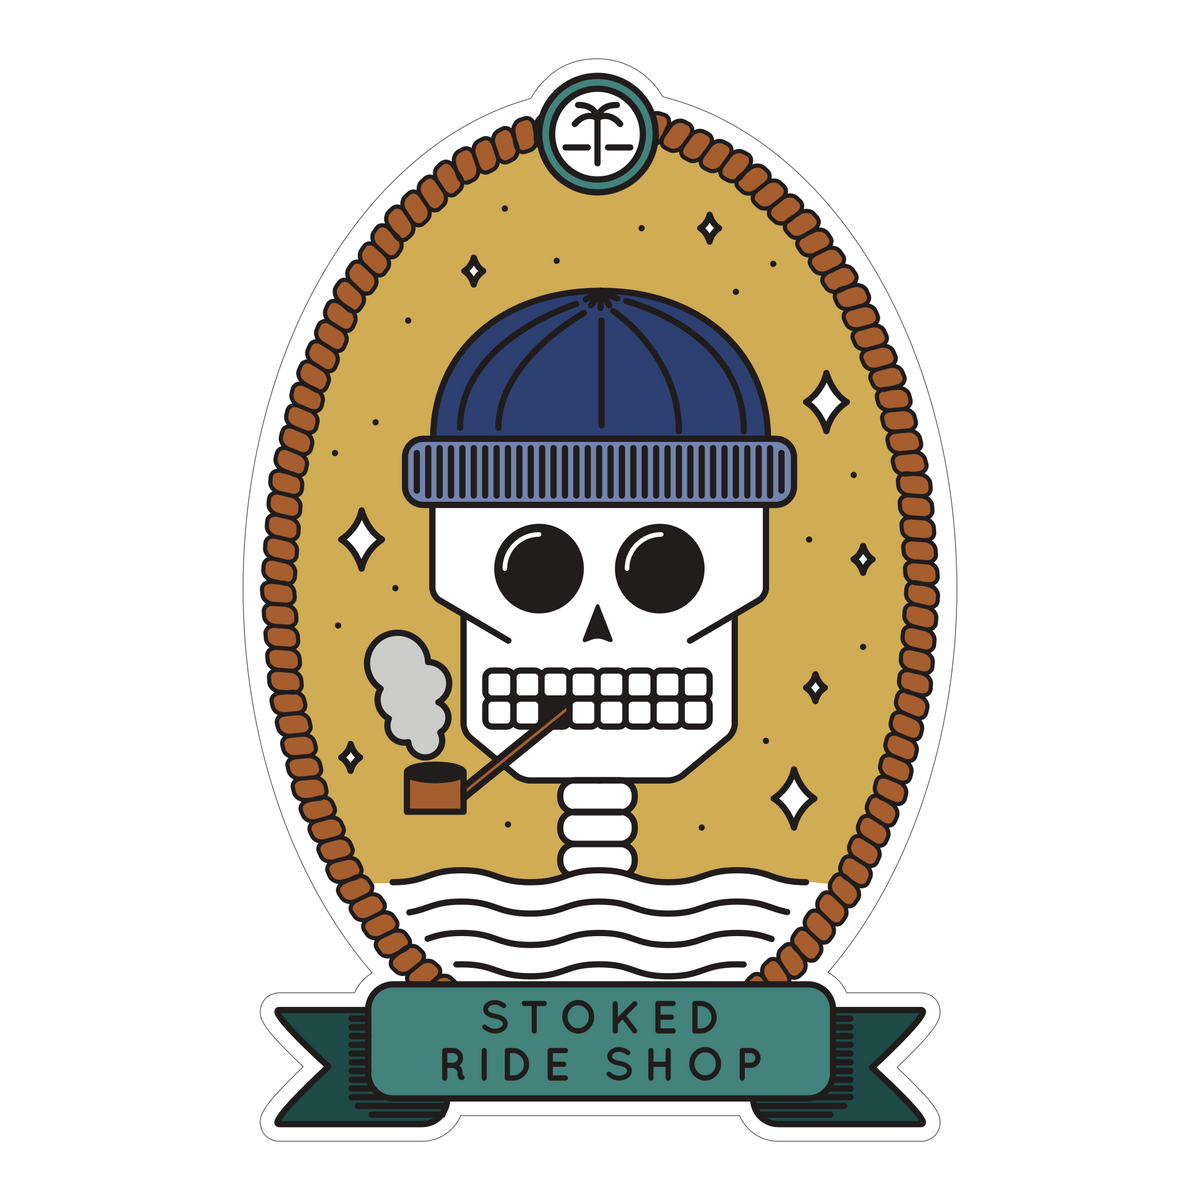 Stoked Ride Shop "Smoking Kills" Sticker by Spring Break Jake